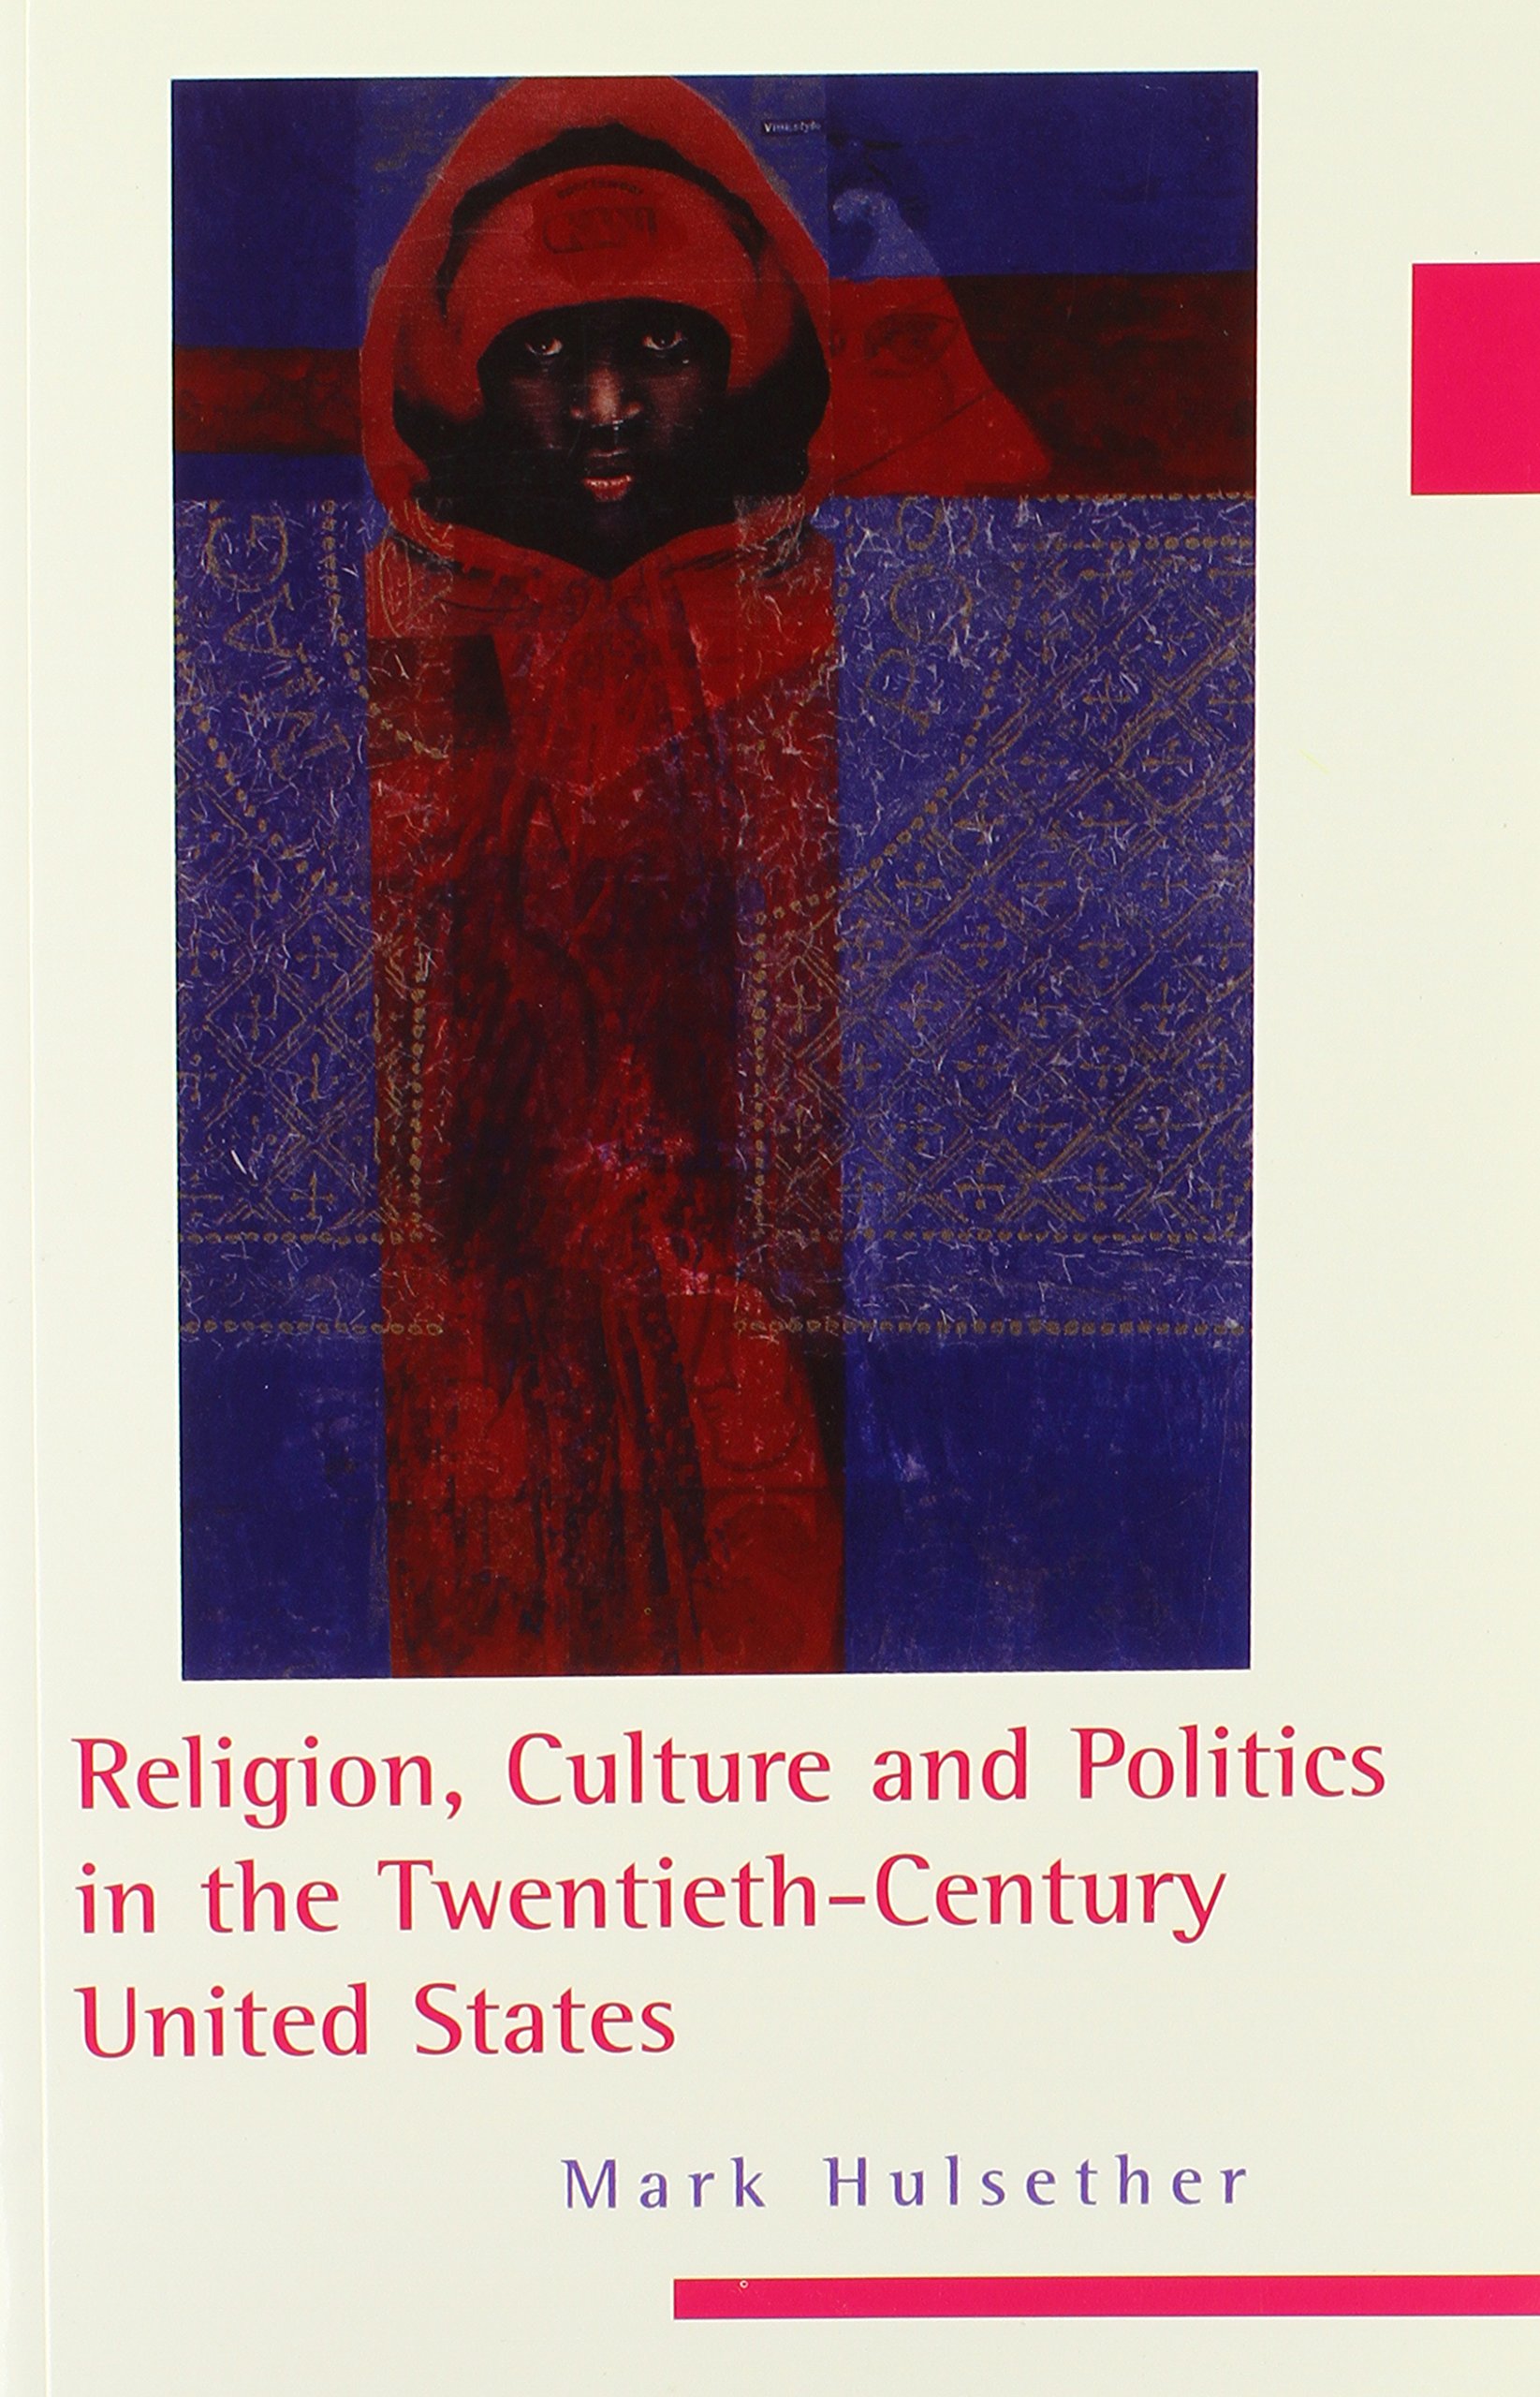 Religion, Culture, and Politics in the Twentieth-Century United States